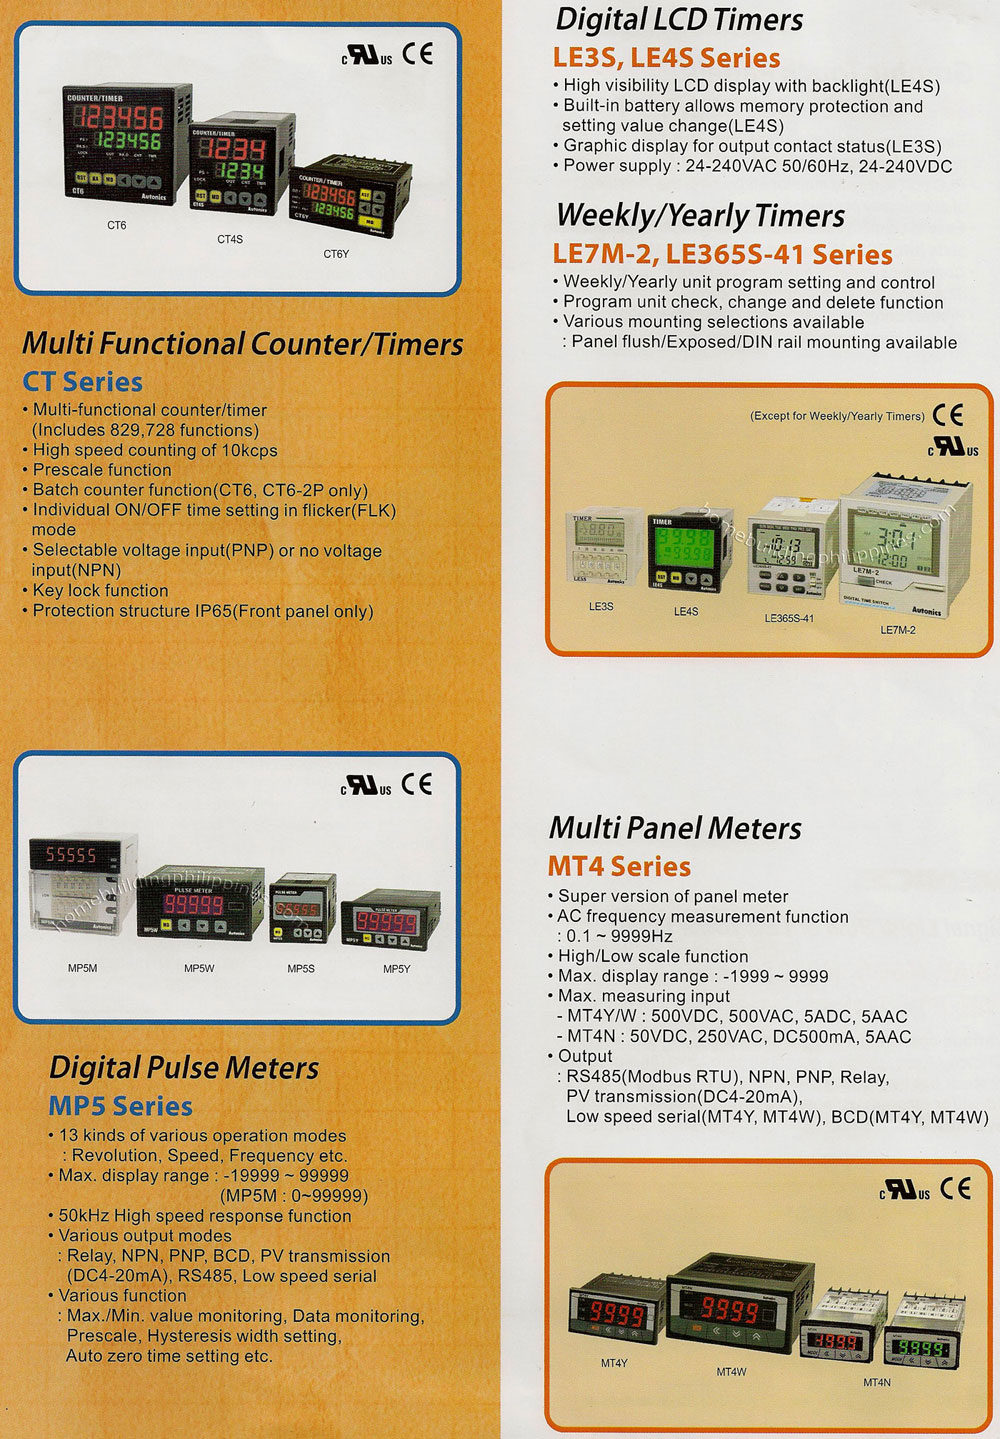 Multi Functional Counter/Timer, Digital Pulse Meters, Digital LCD Timers, Multi Panel Meters